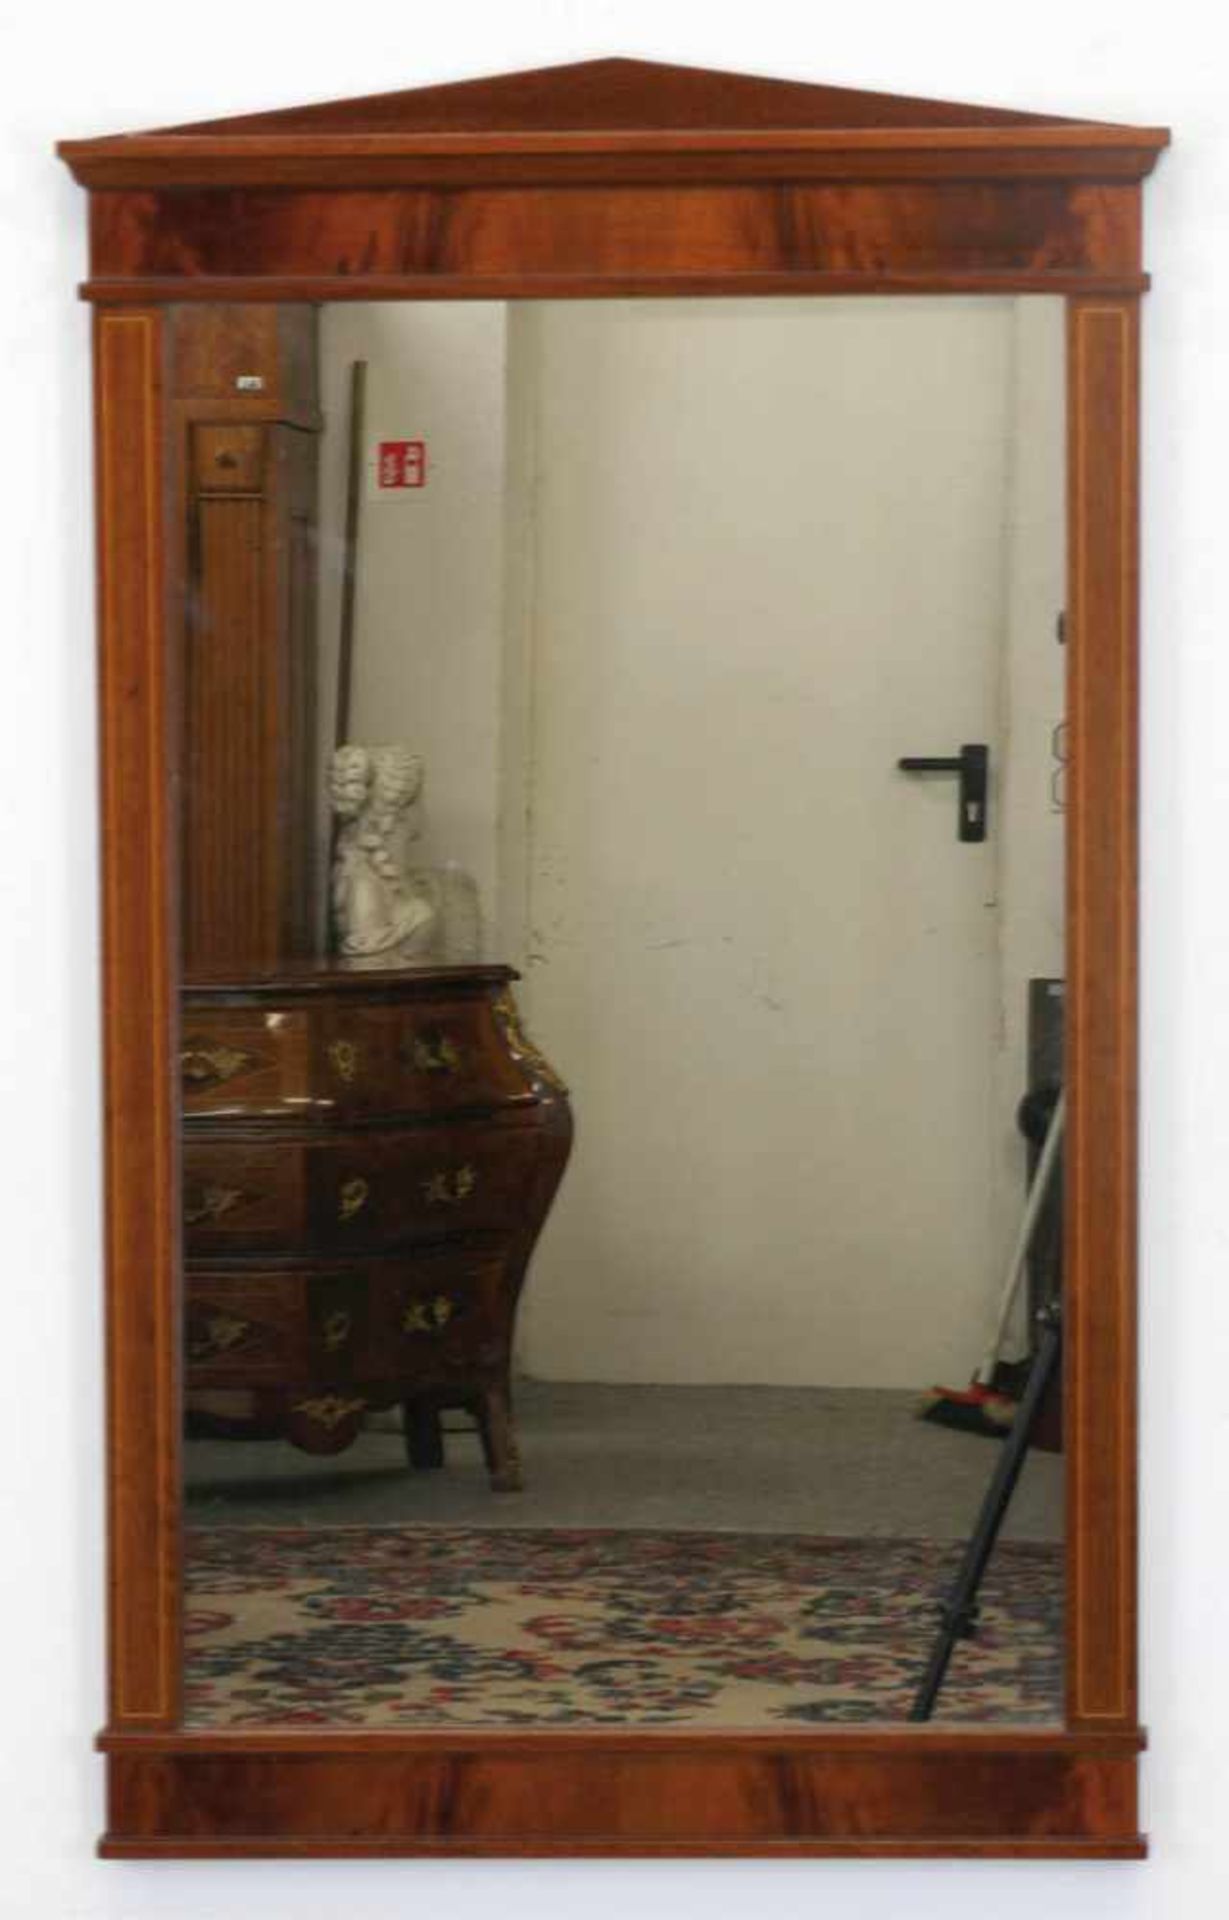 Spiegel im Biedermeierstil, 20. Jh., Mahagoni furniert, Fadenintarsien, 99x60 cm